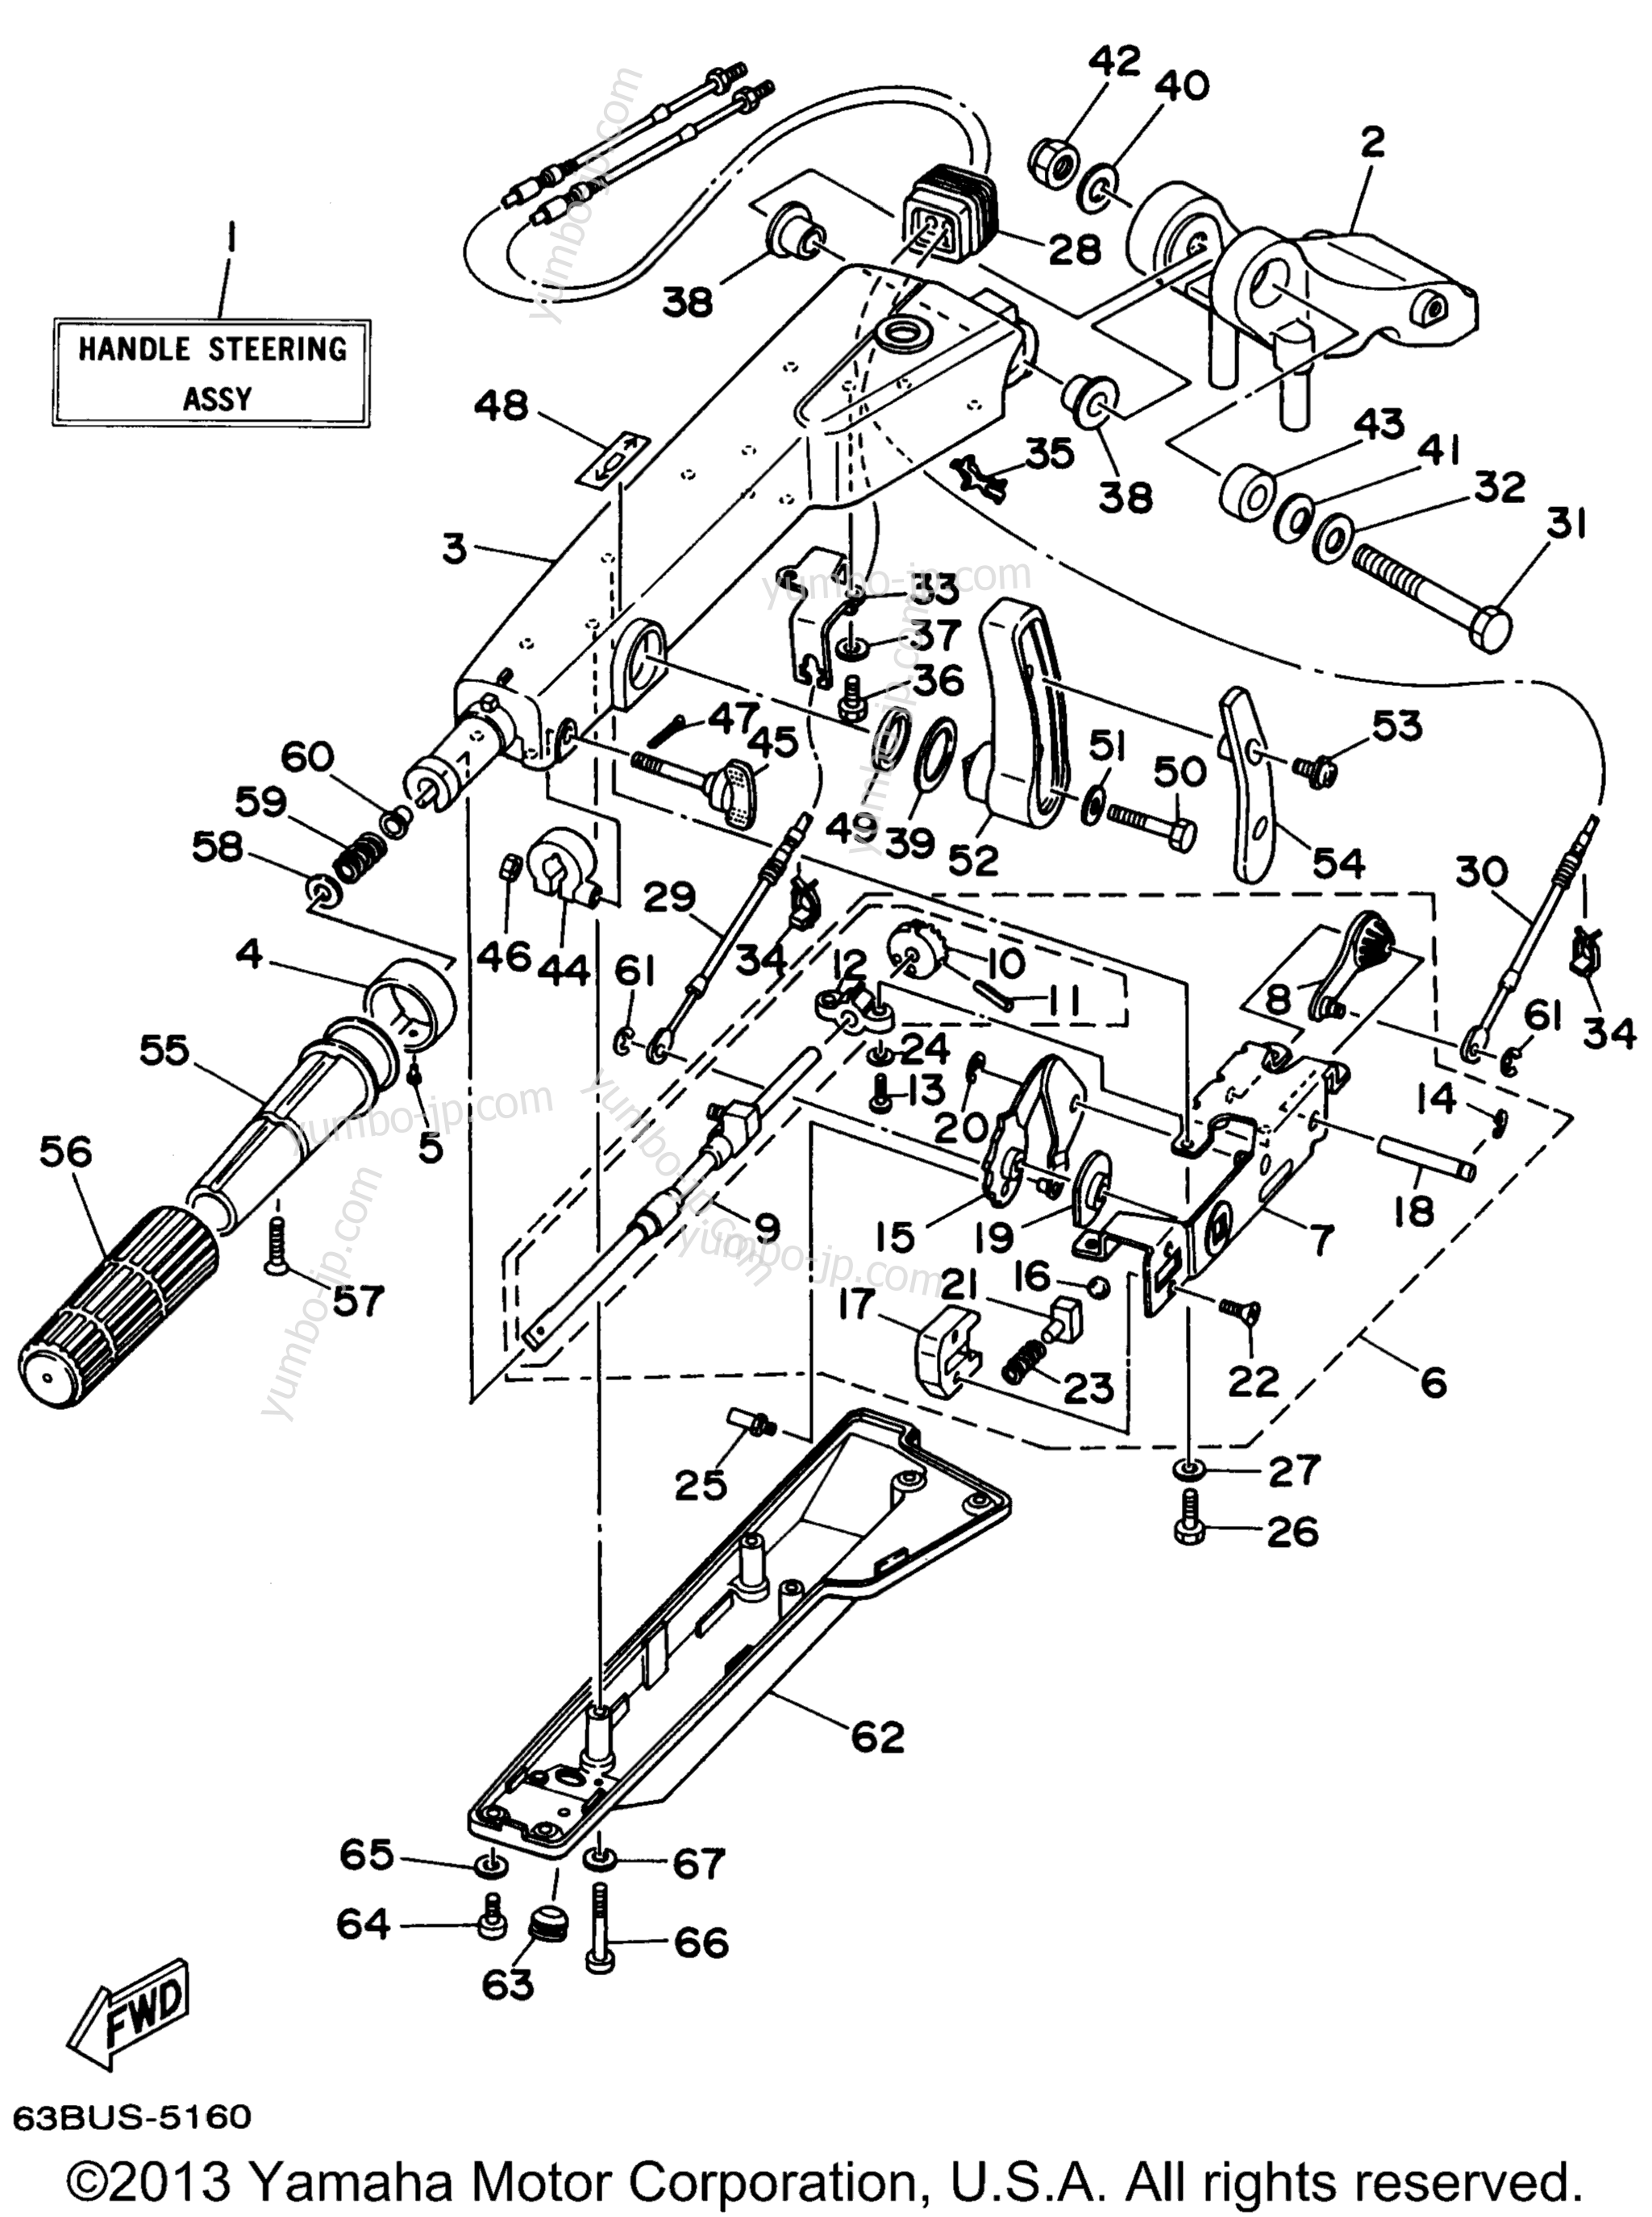 Steering для лодочных моторов YAMAHA P40EJRW_THLW (40MSHW) 1998 г.